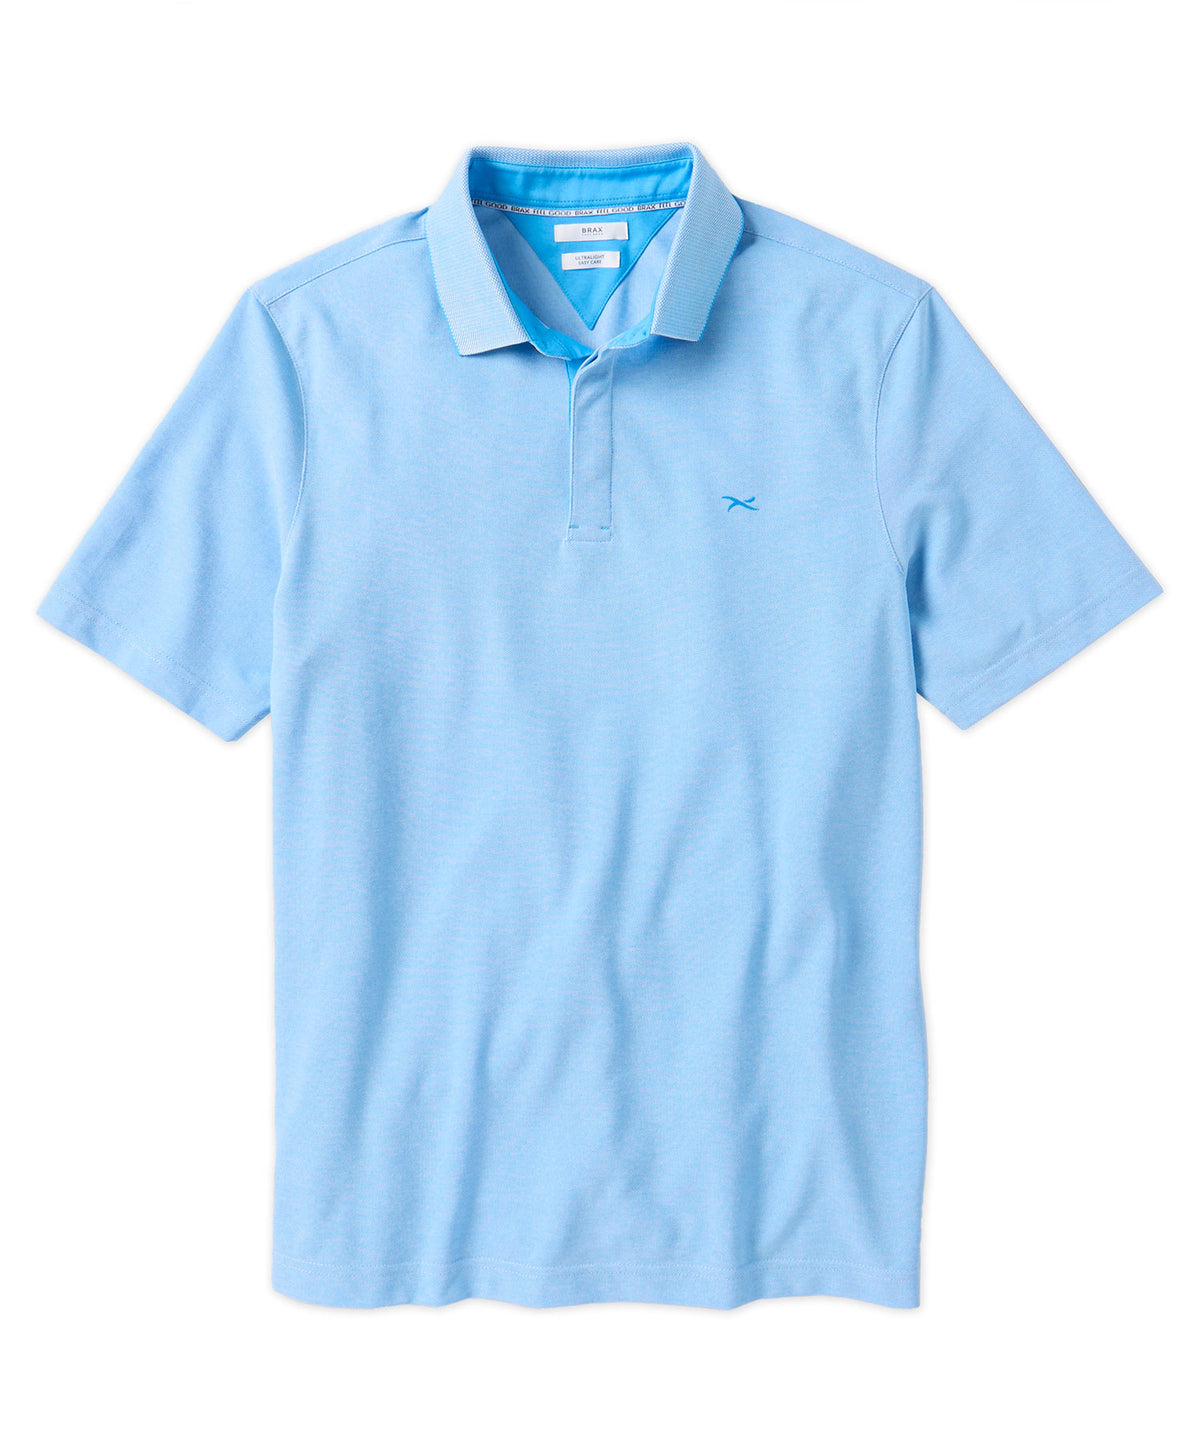 Brax Cotton-Blend Pique Polo Shirt